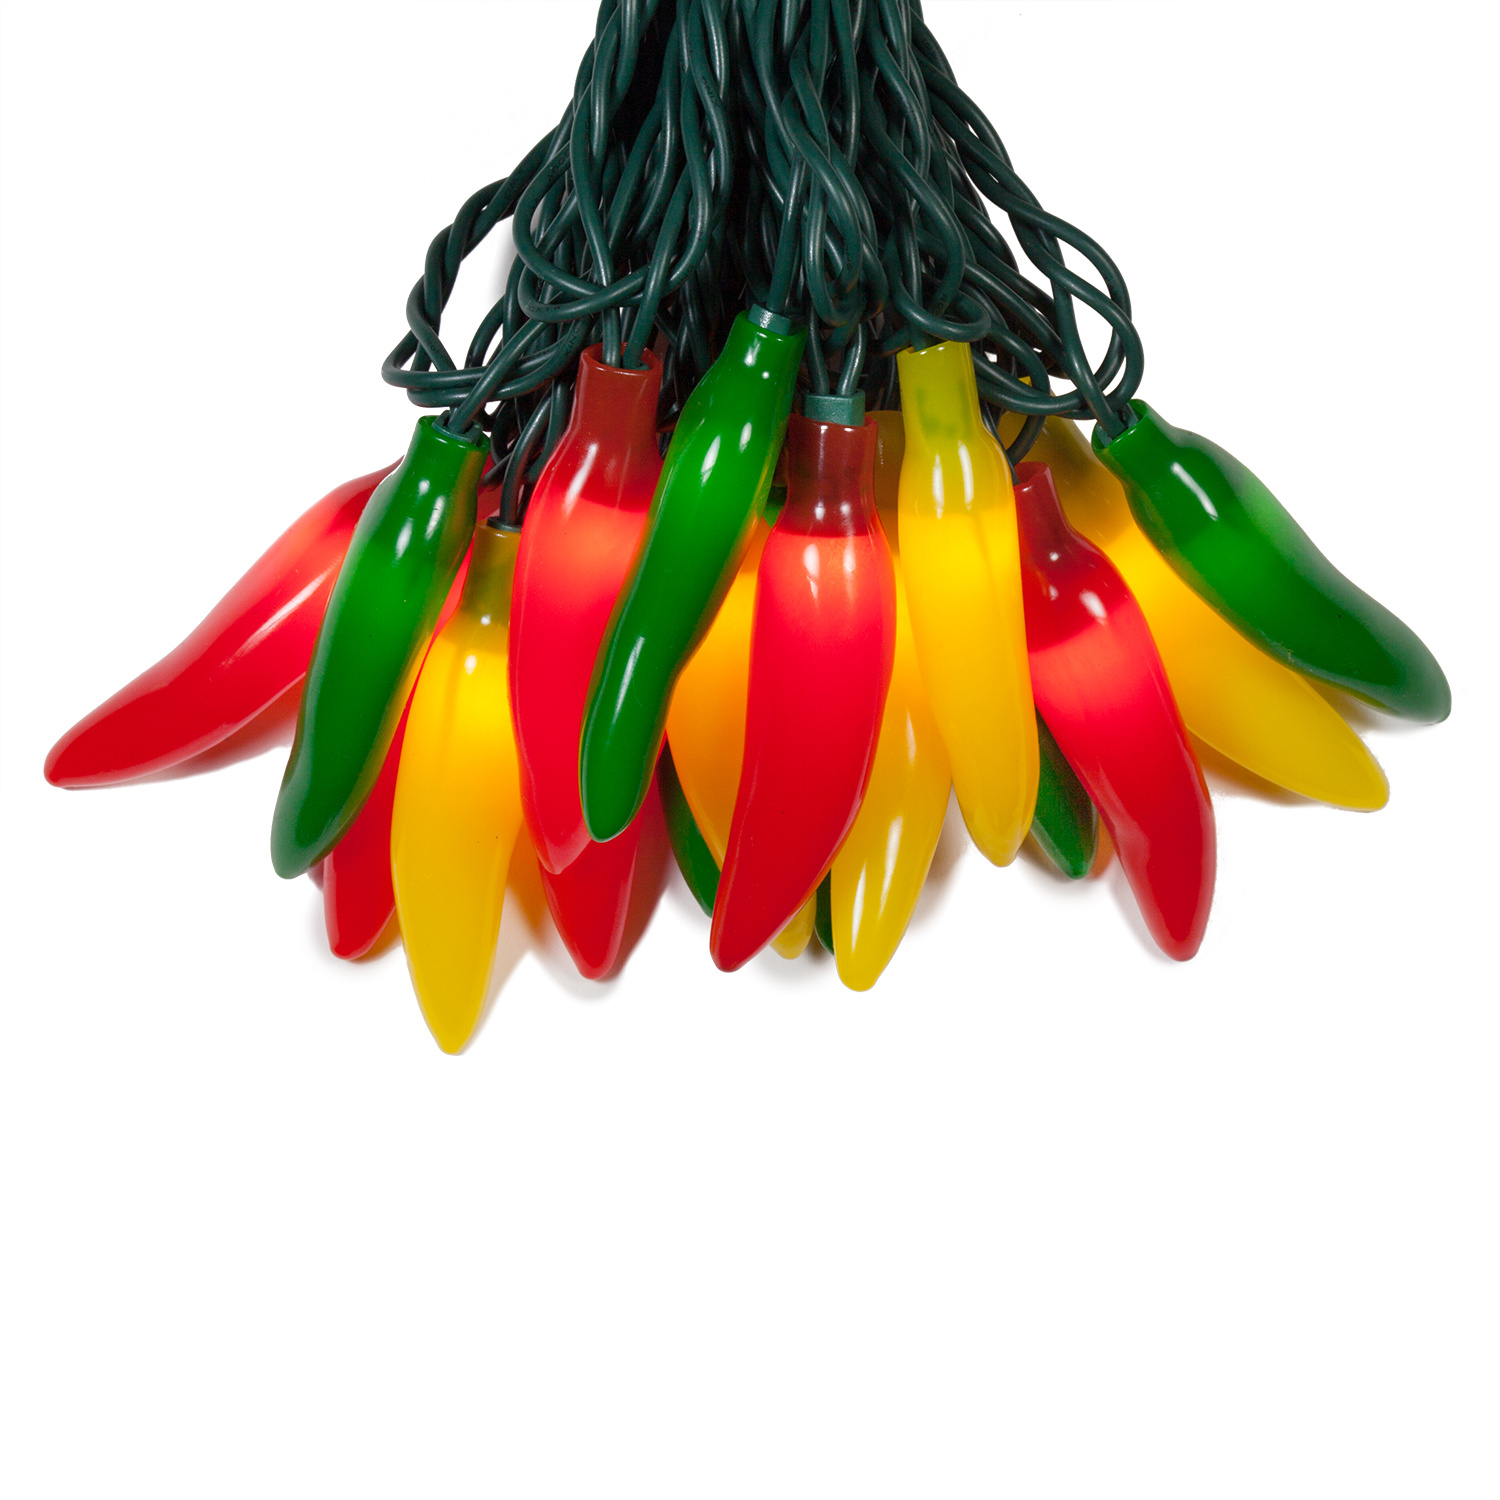 Novelty Lights - Chili Pepper Light Set, 35 Multicolor Lights